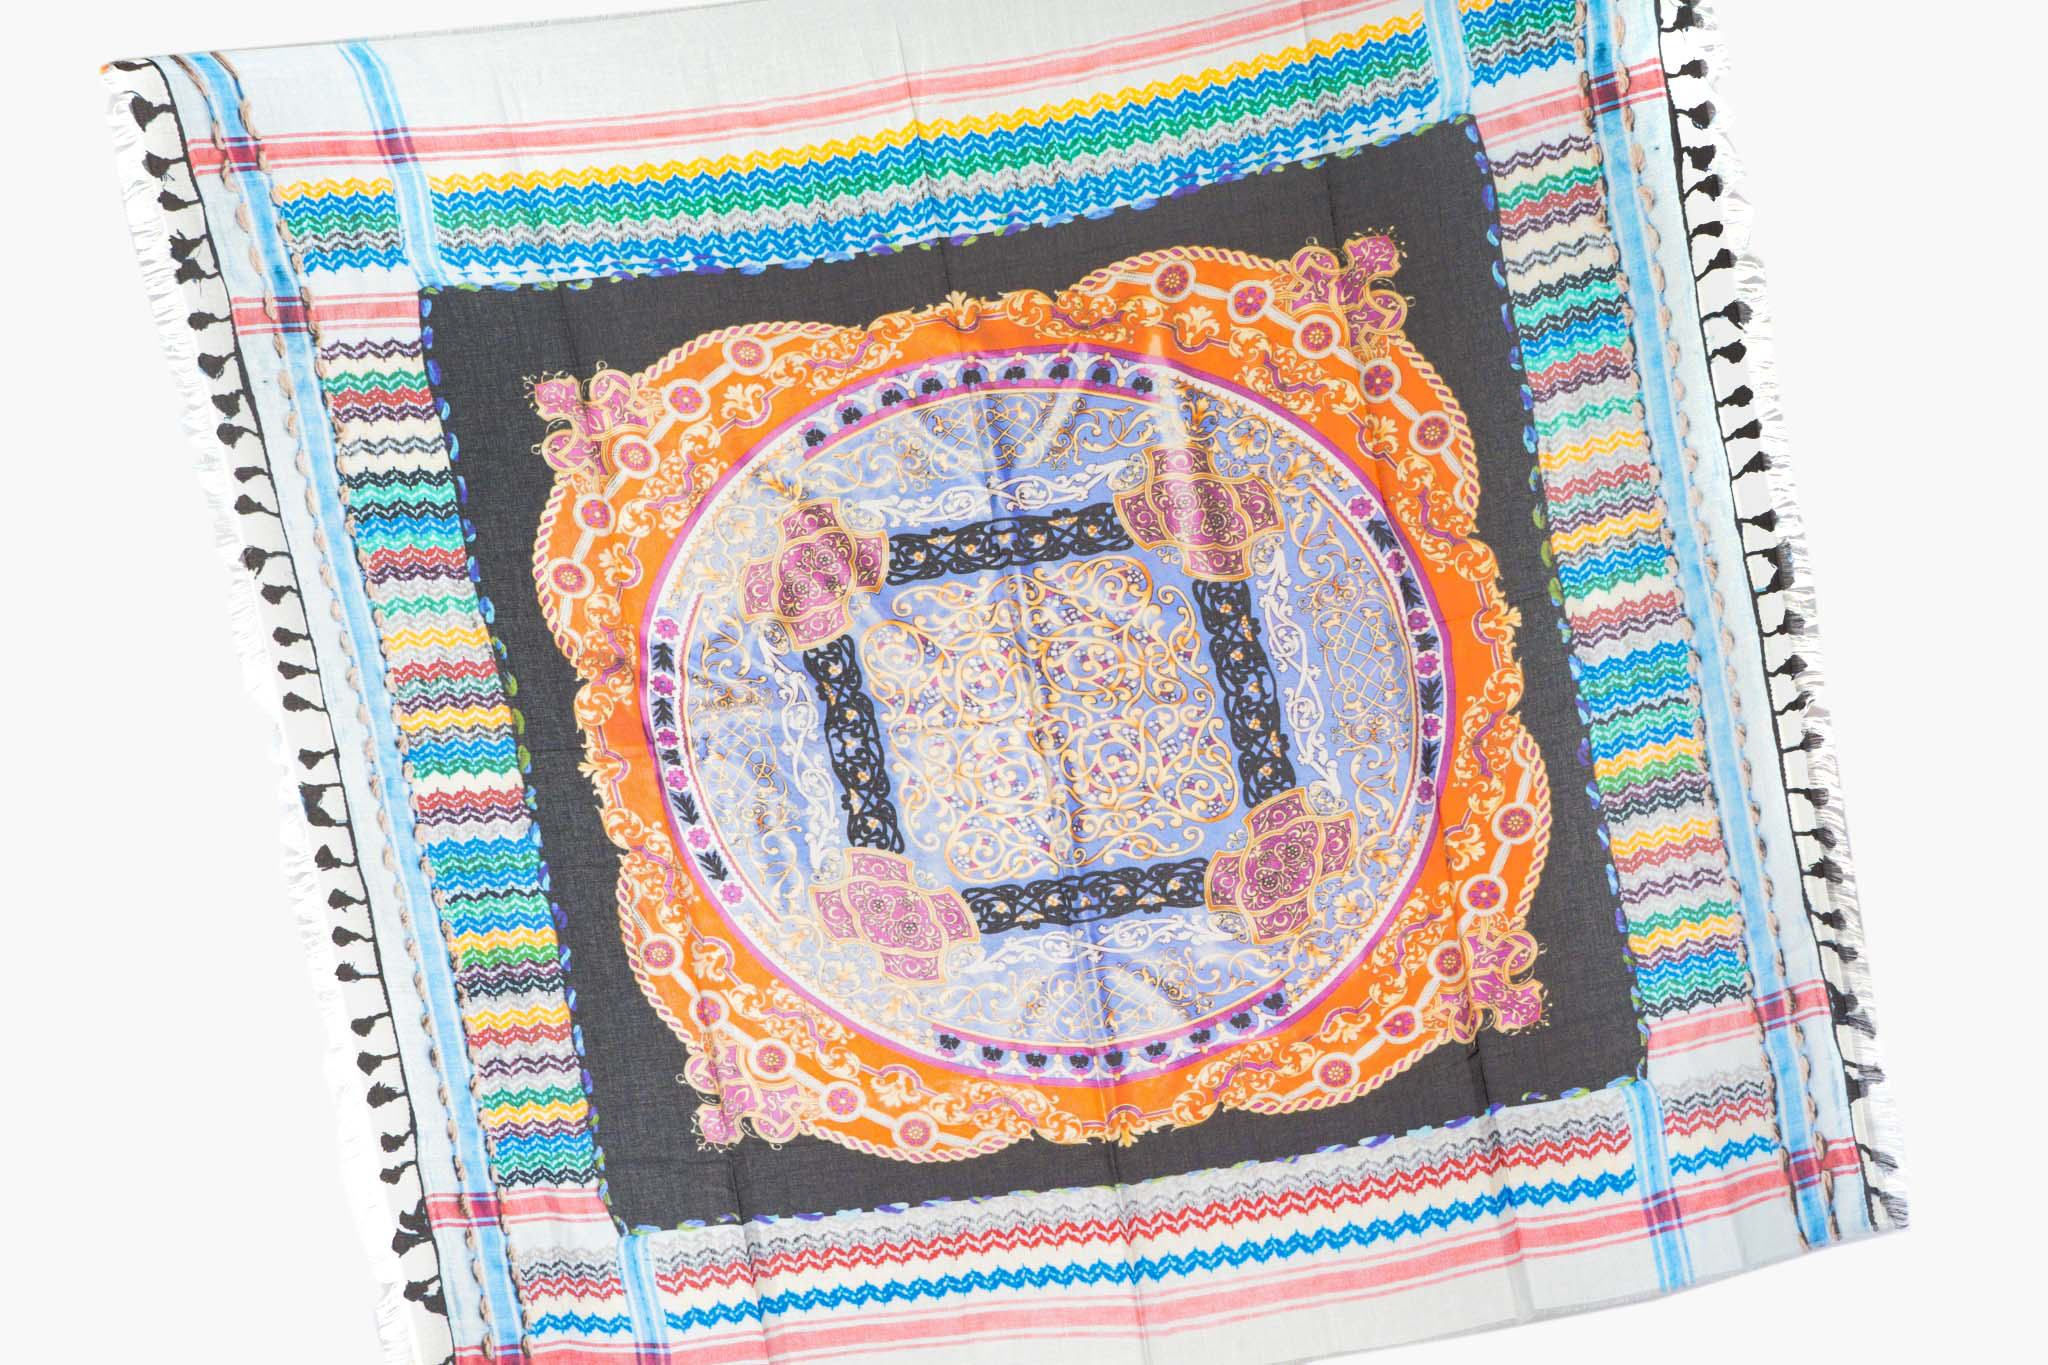 3d print of a keffiyeh with baroque 2 foulard